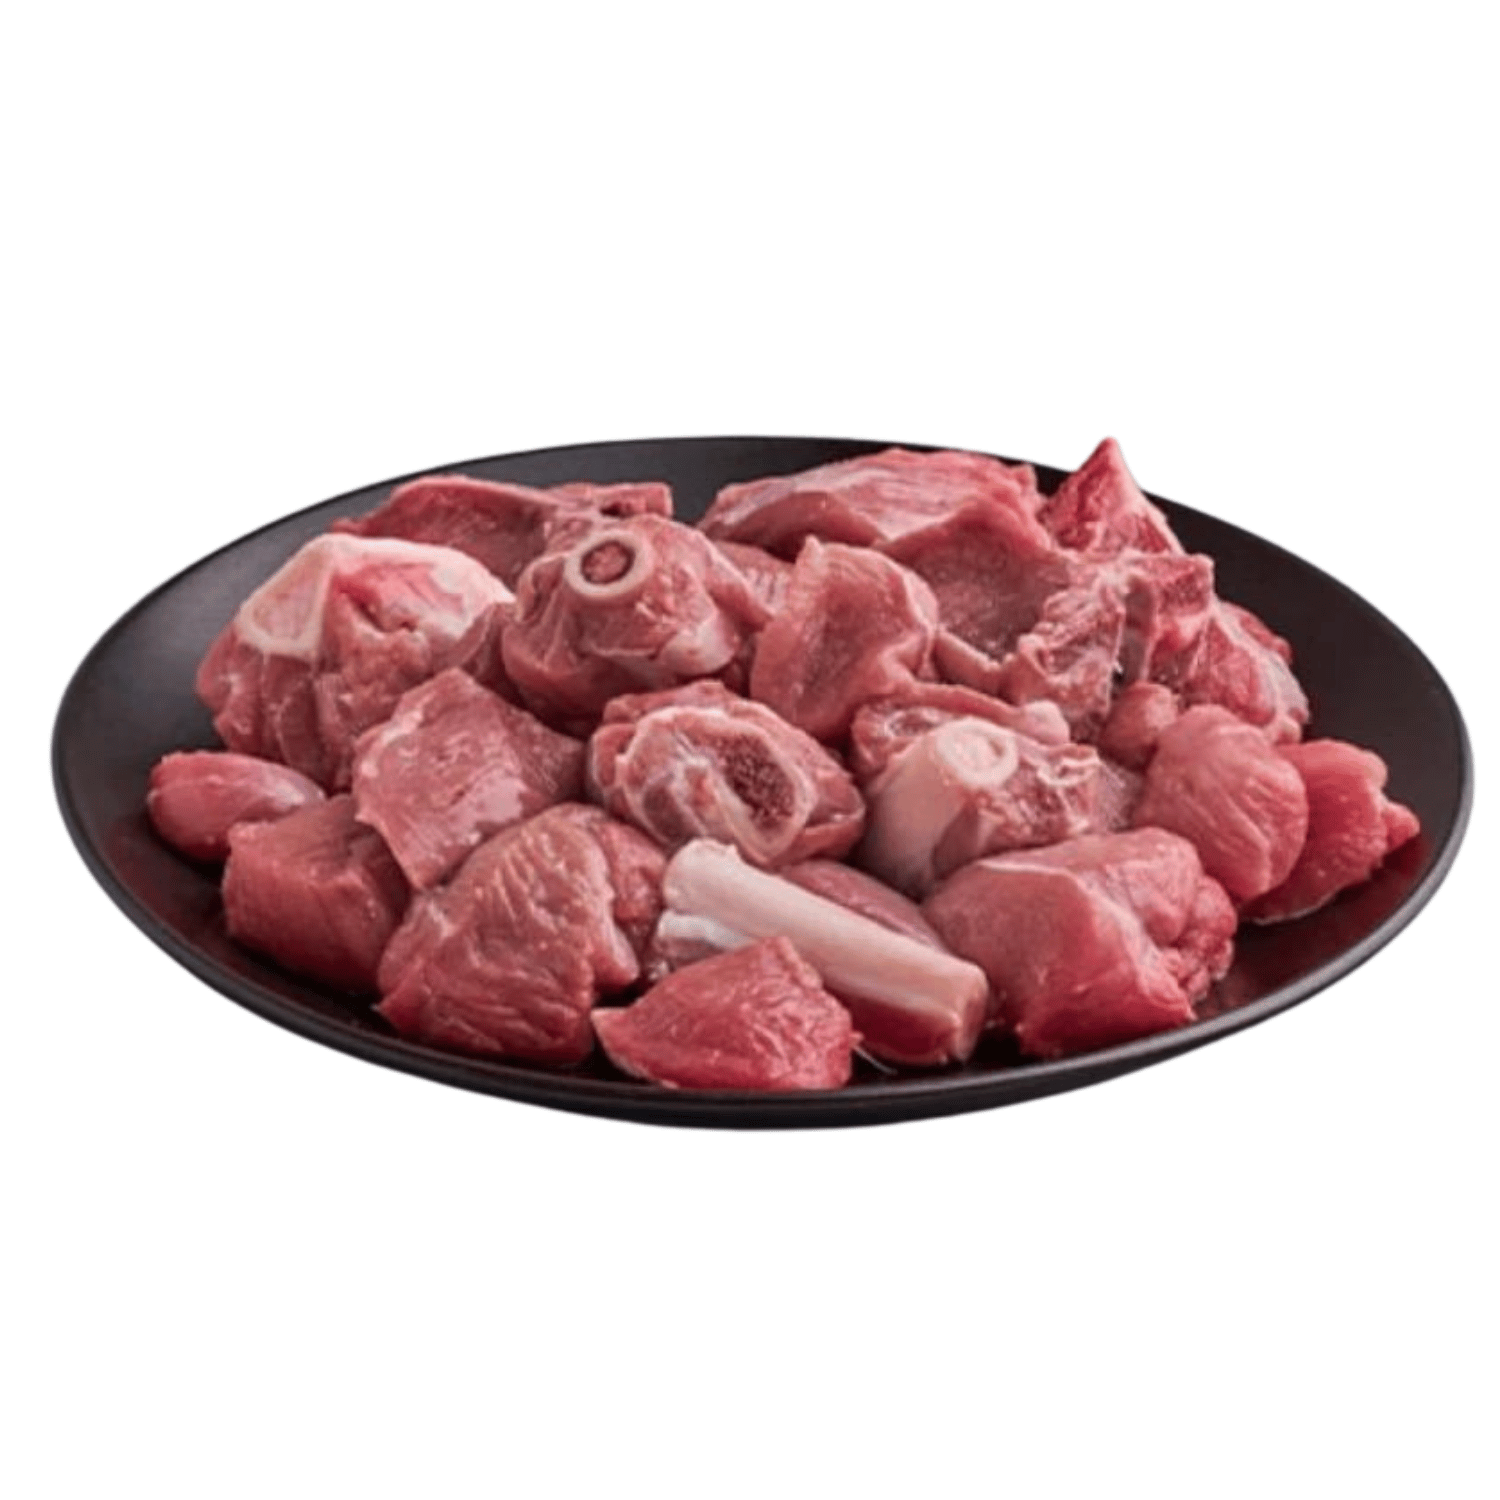 Mutton Curry Cut (Rewaji) - Medium Pieces